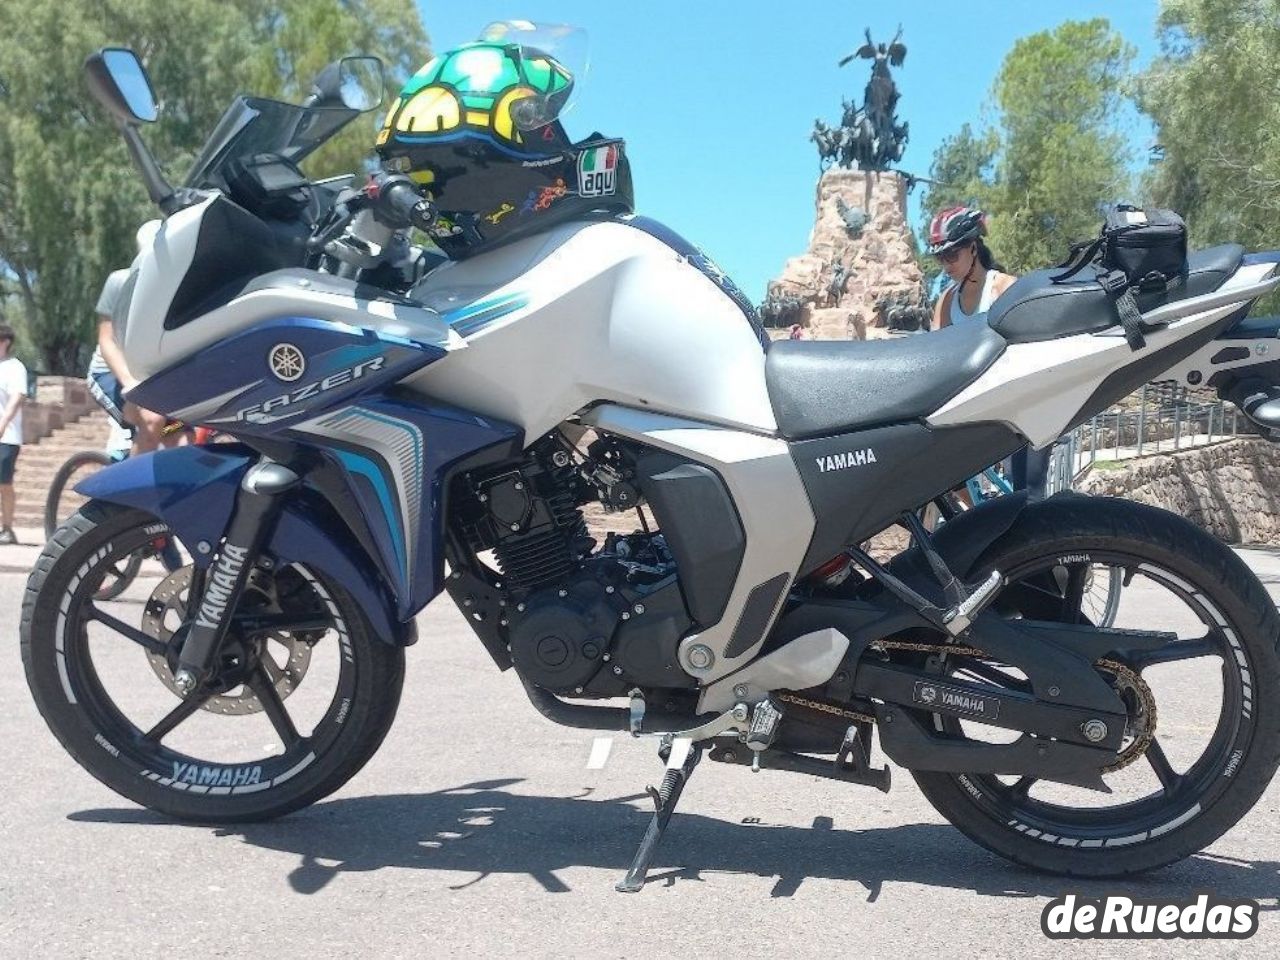 Yamaha Fazer Usada en Mendoza, deRuedas